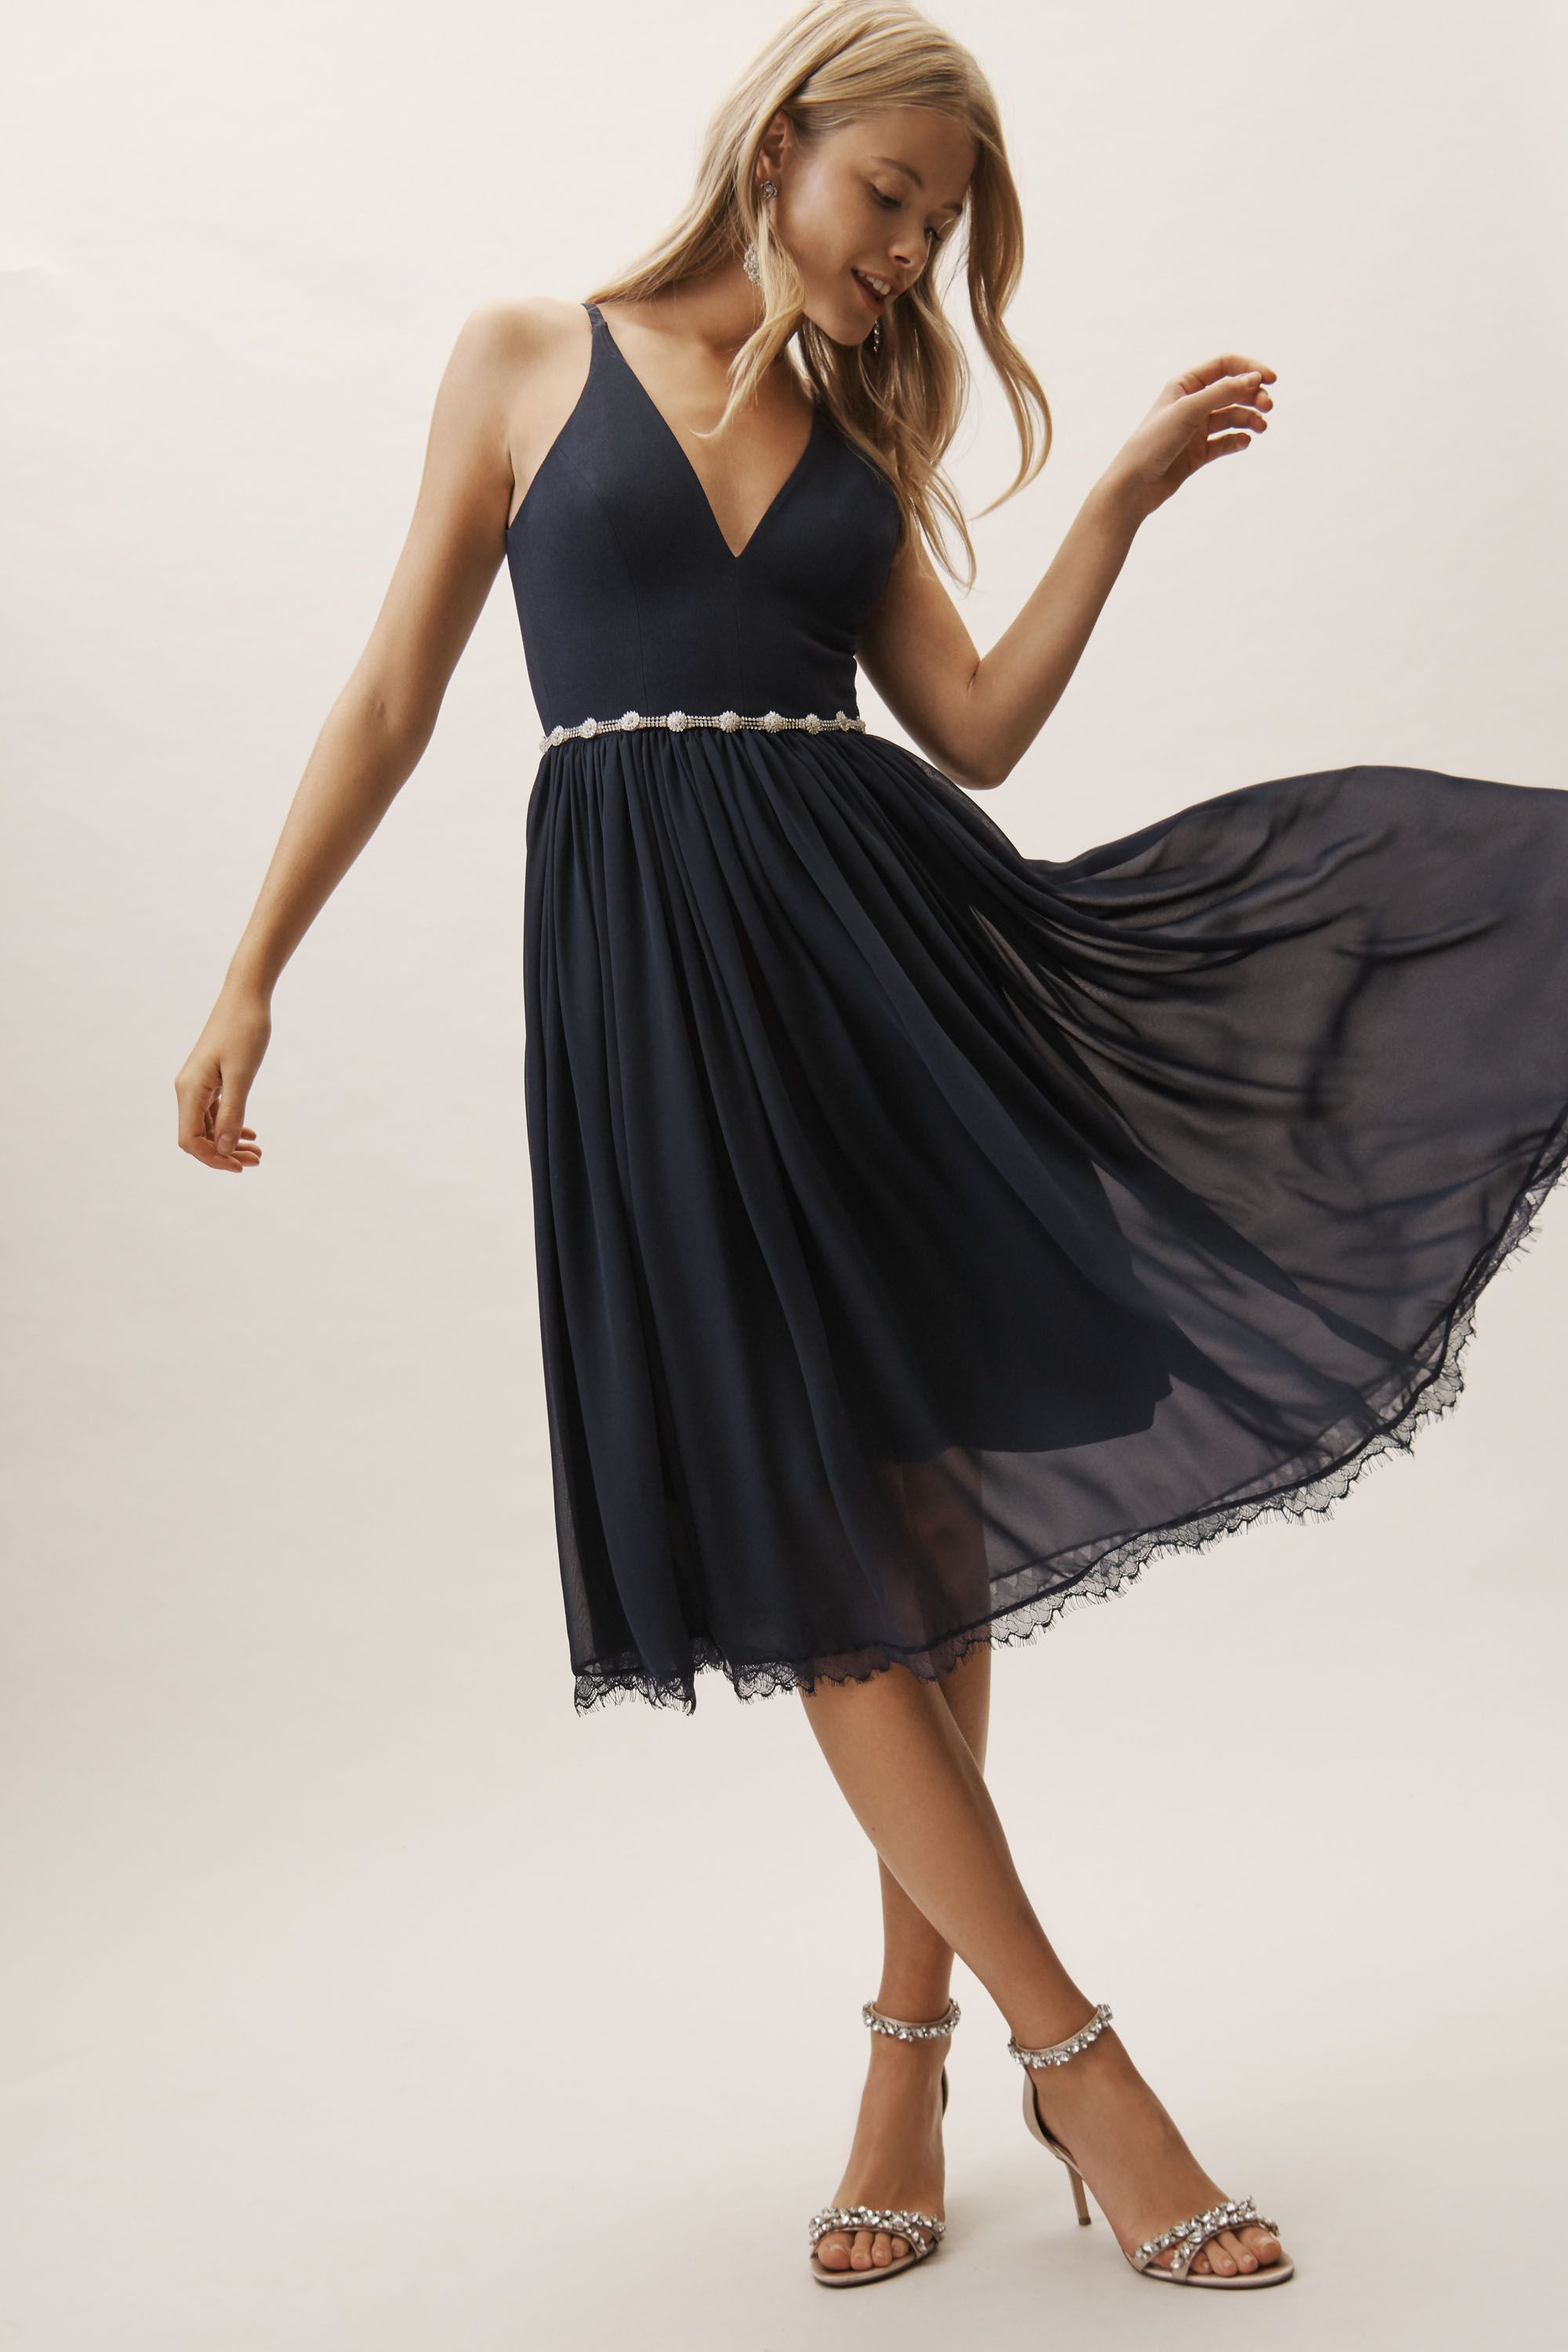 Alicia Dress Midnight Blue in Sale | BHLDN